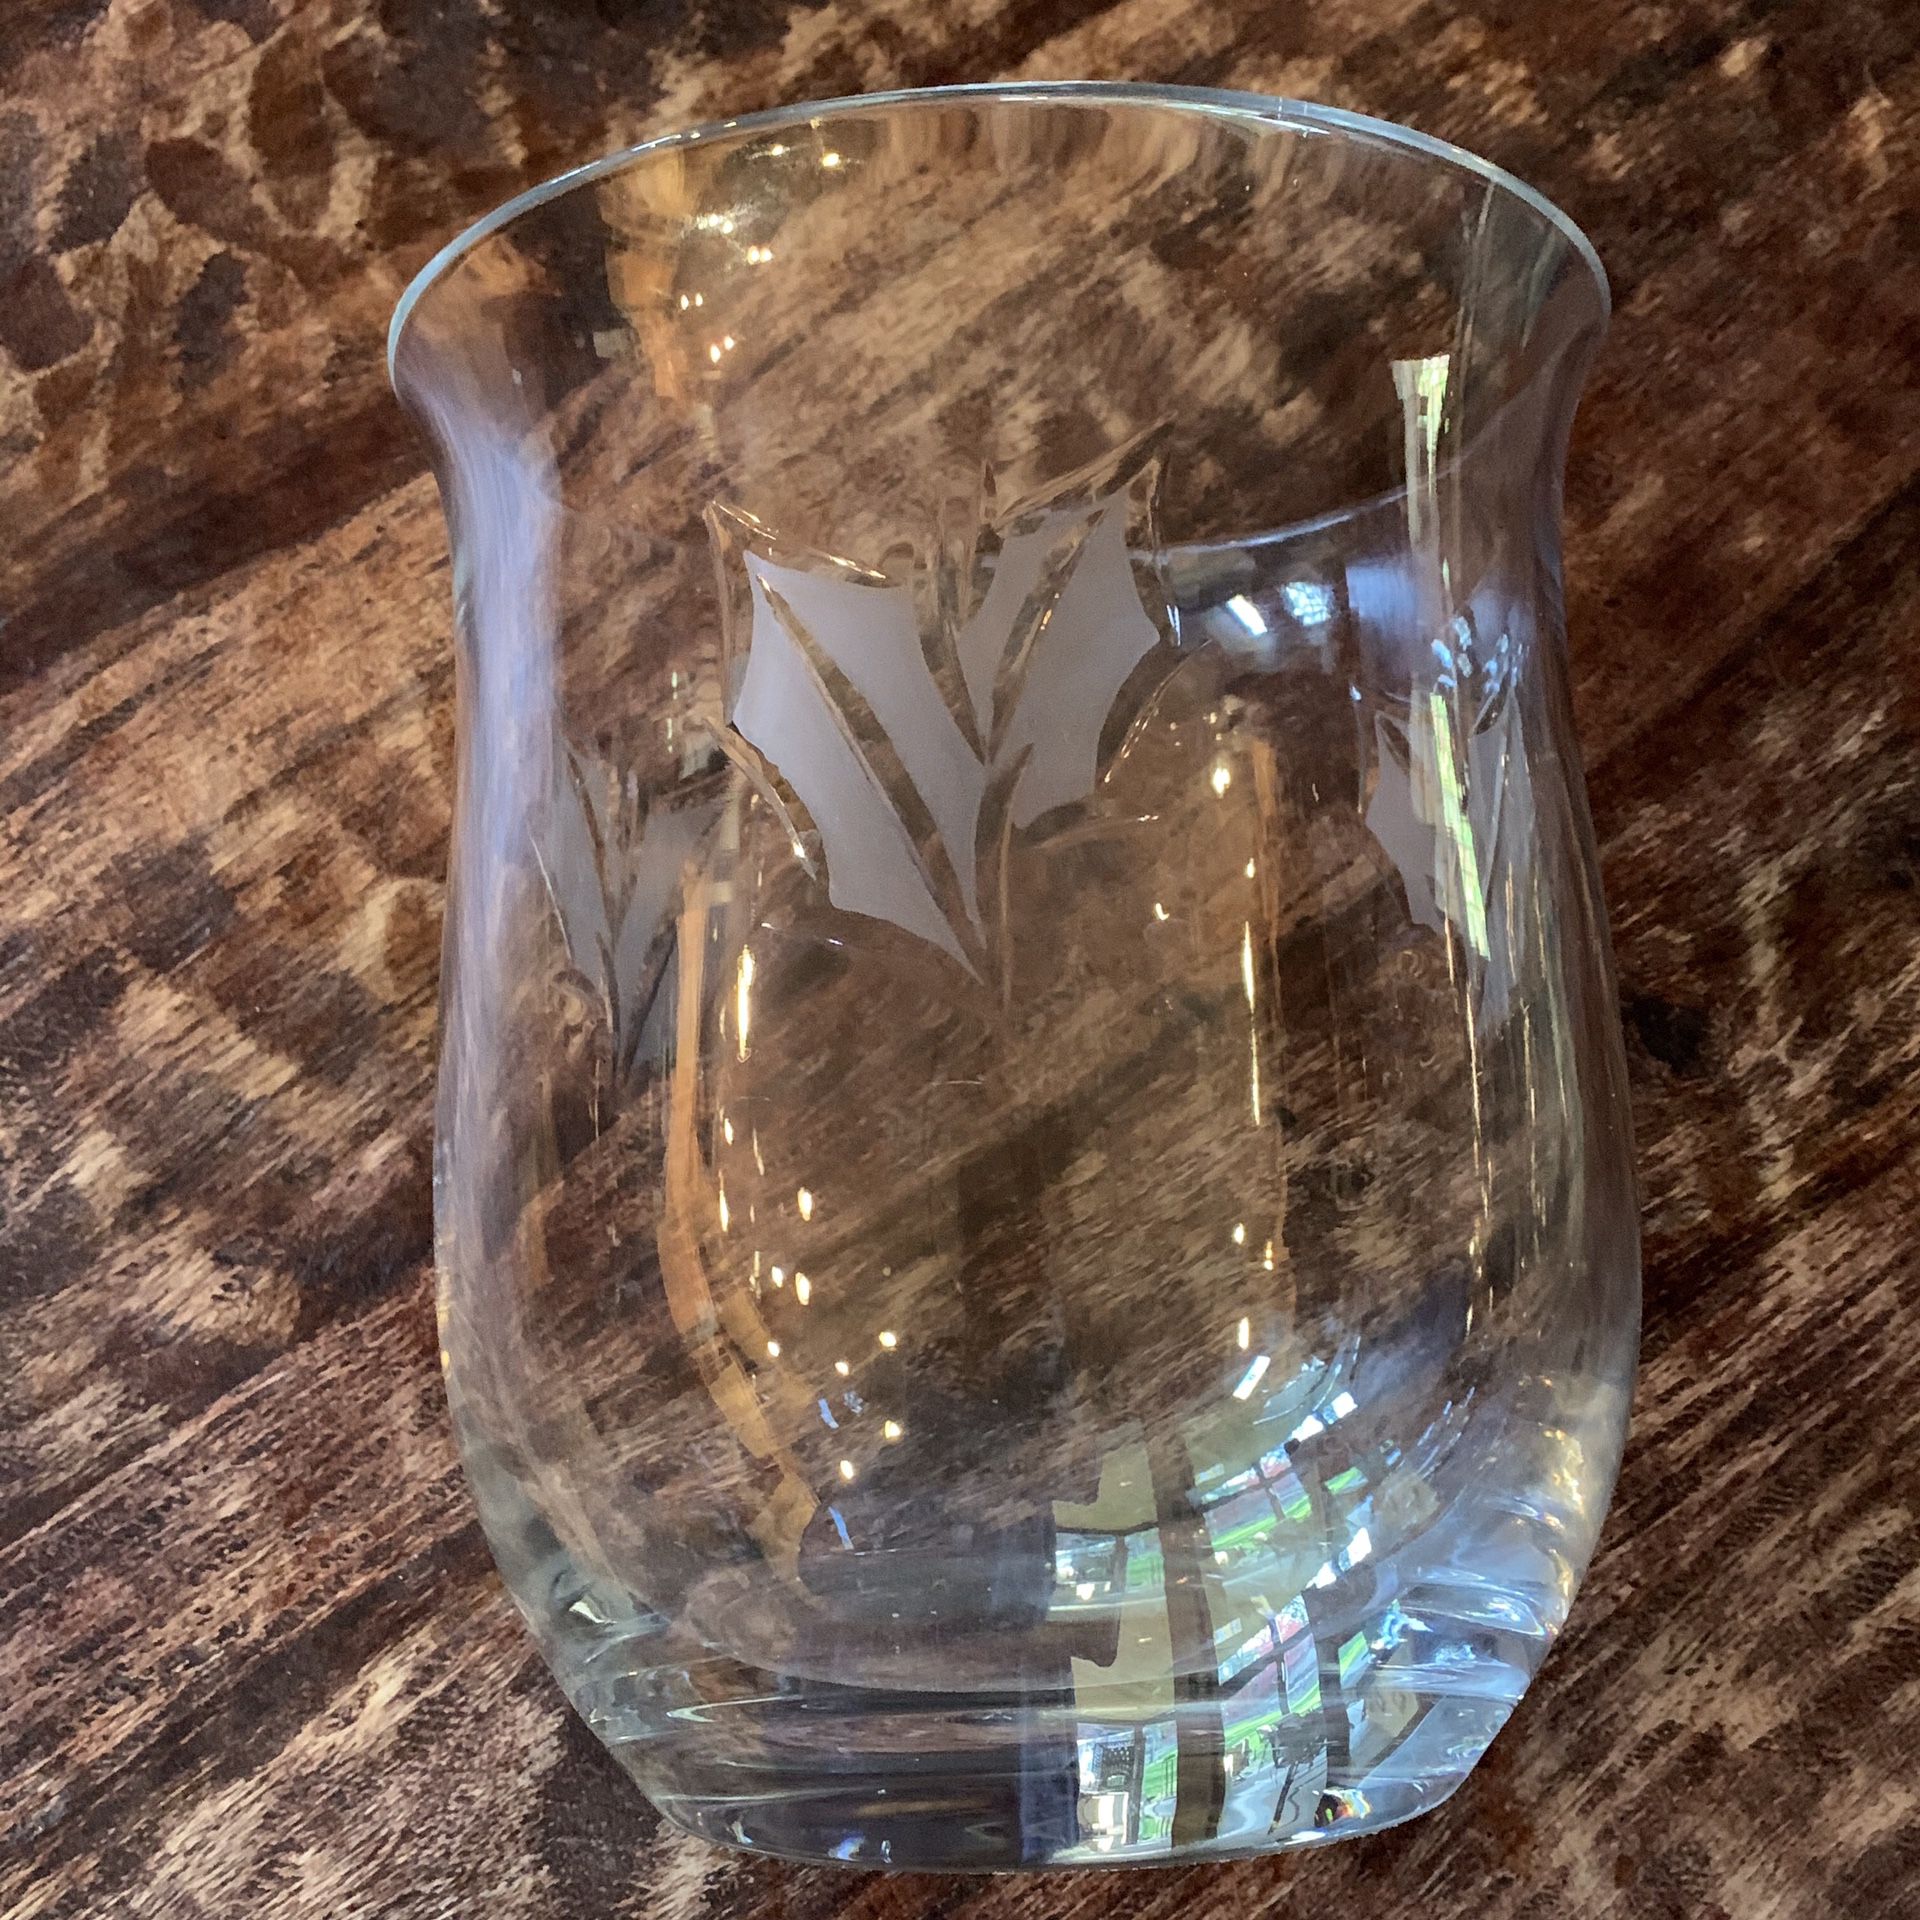 Vintage Rogaska Crystal Vase etched with Holly leaves.